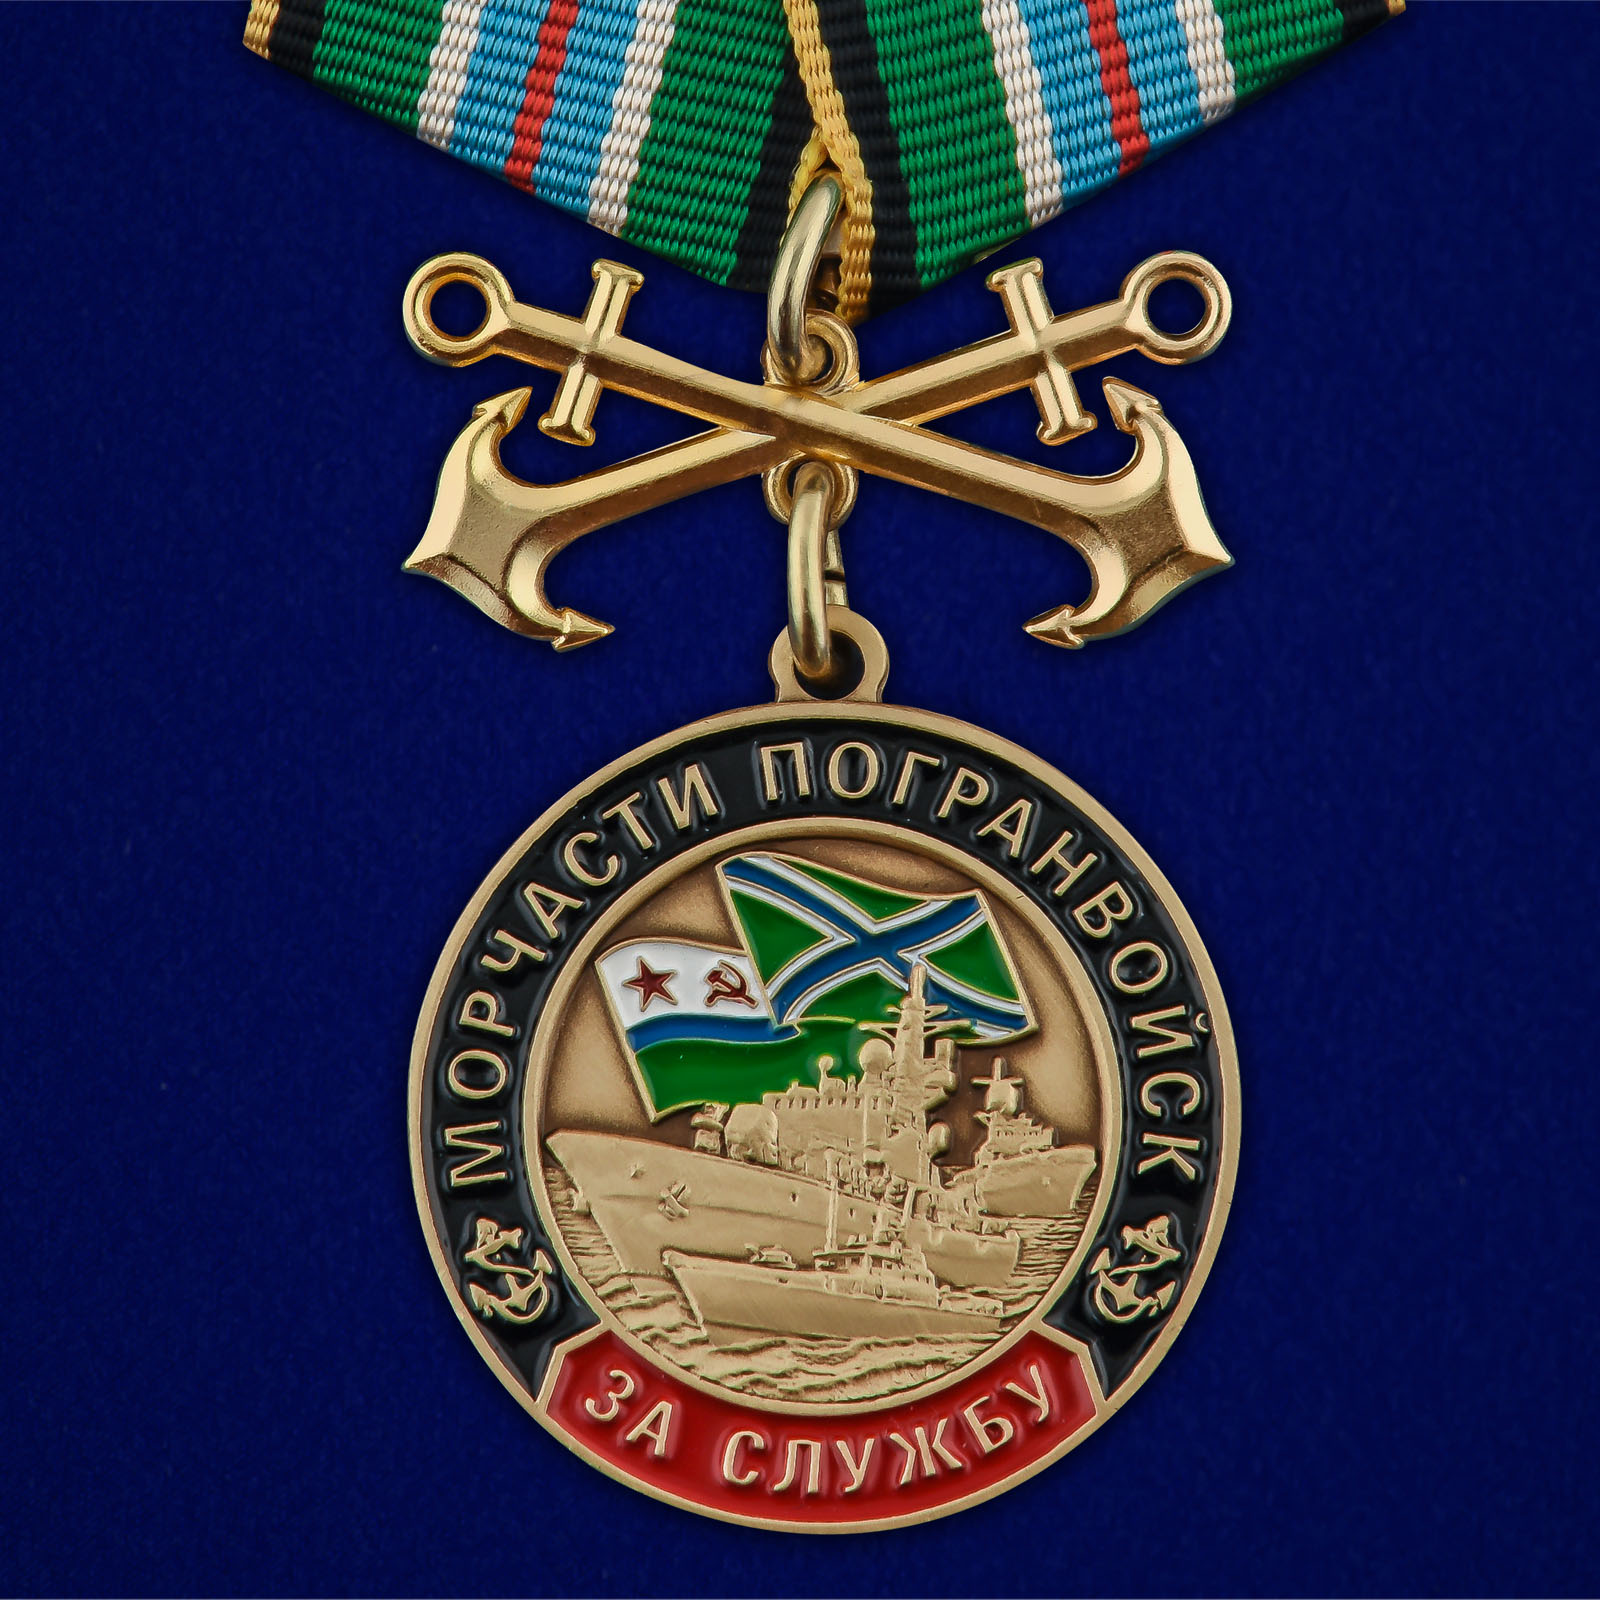 Купить медаль За службу в Морчастях Погранвойск онлайн